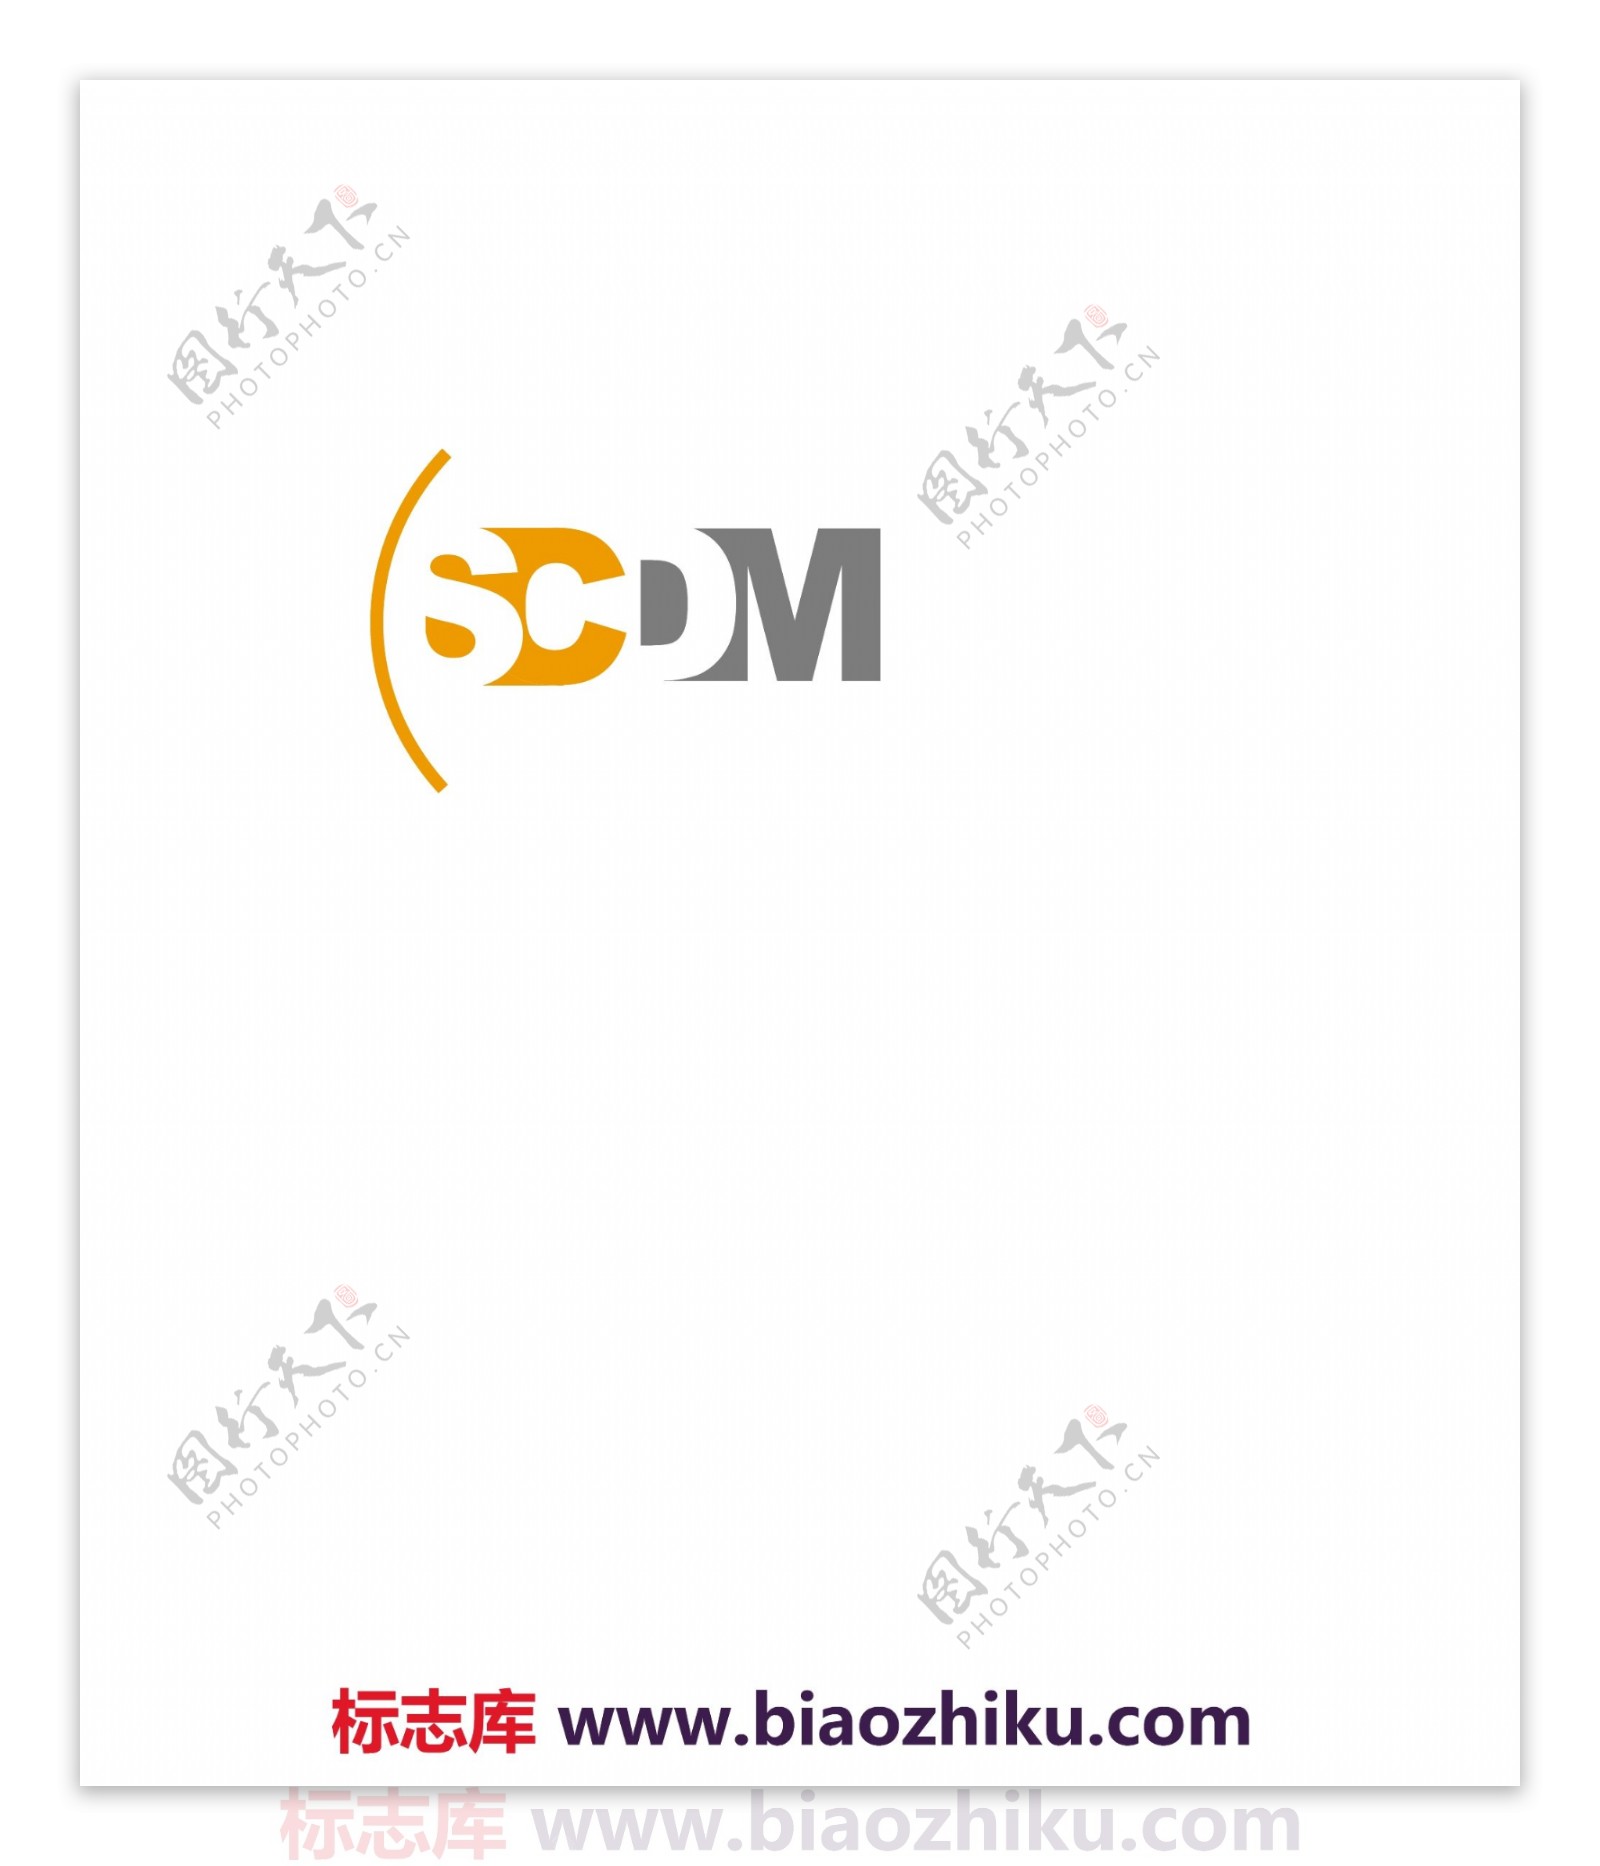 scdmlogo设计欣赏scdm网络公司标志下载标志设计欣赏